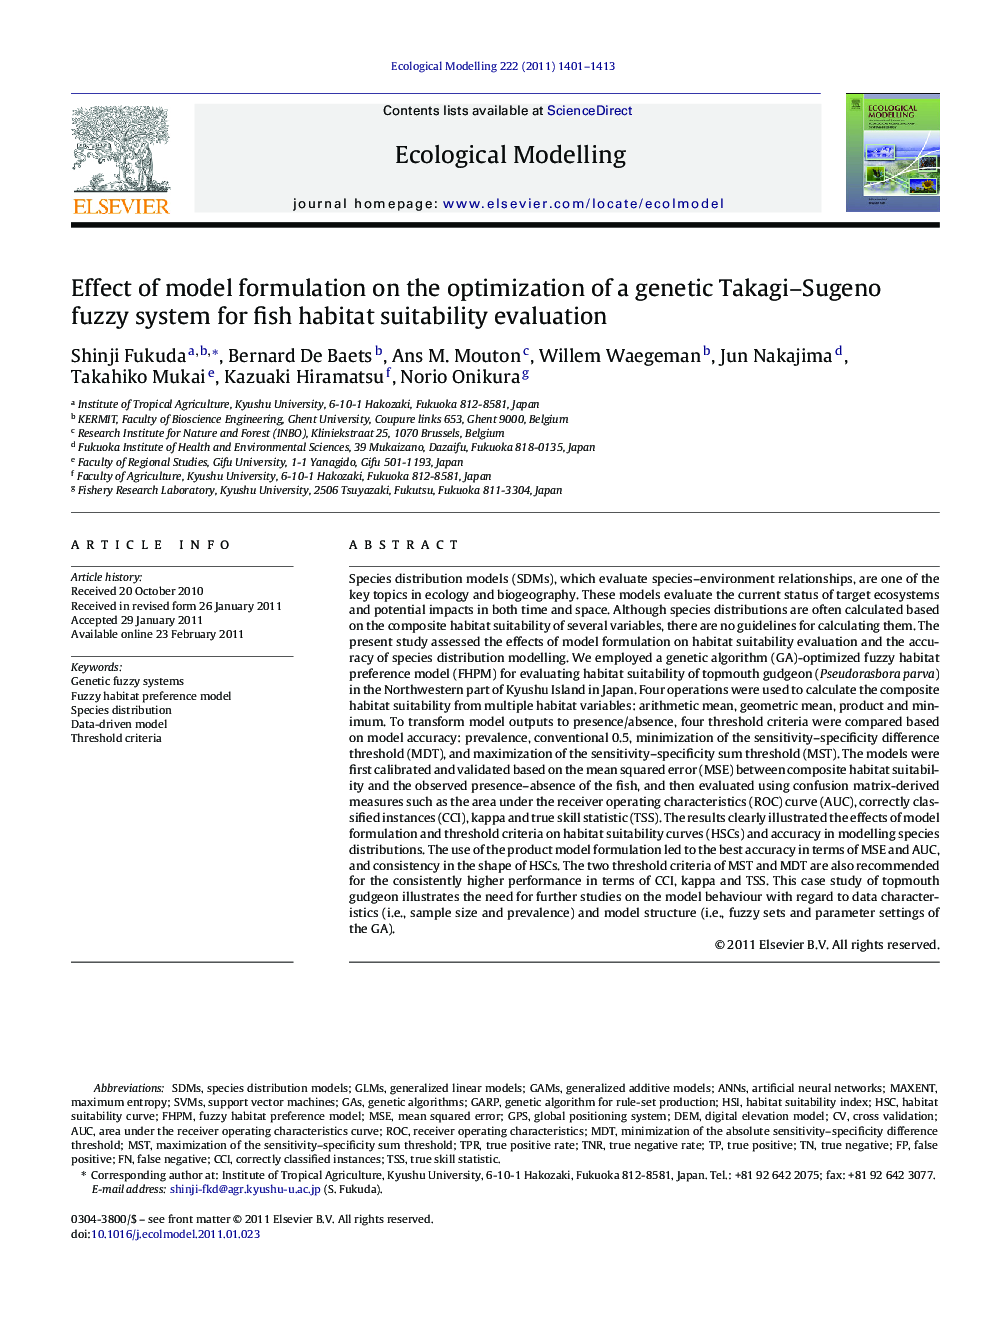 Effect of model formulation on the optimization of a genetic Takagi-Sugeno fuzzy system for fish habitat suitability evaluation